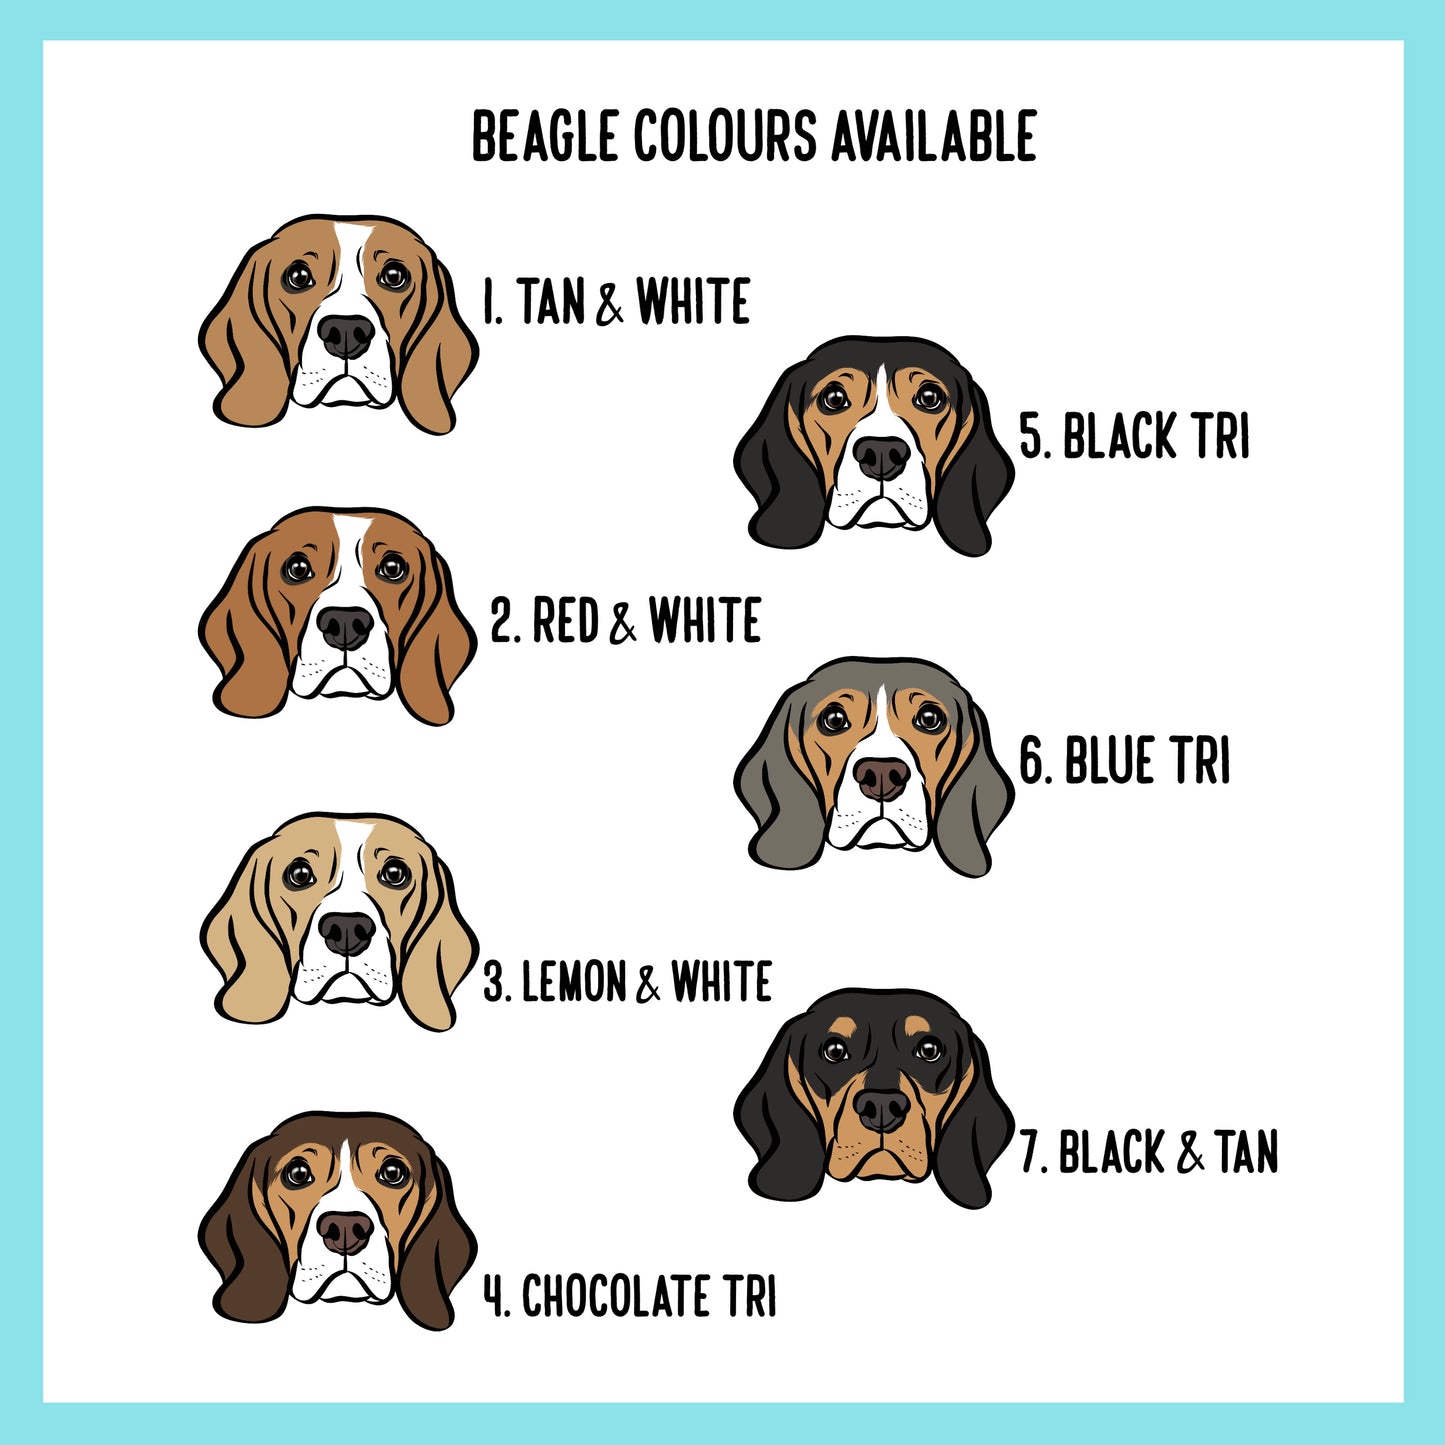 Personalised Beagle Keyring